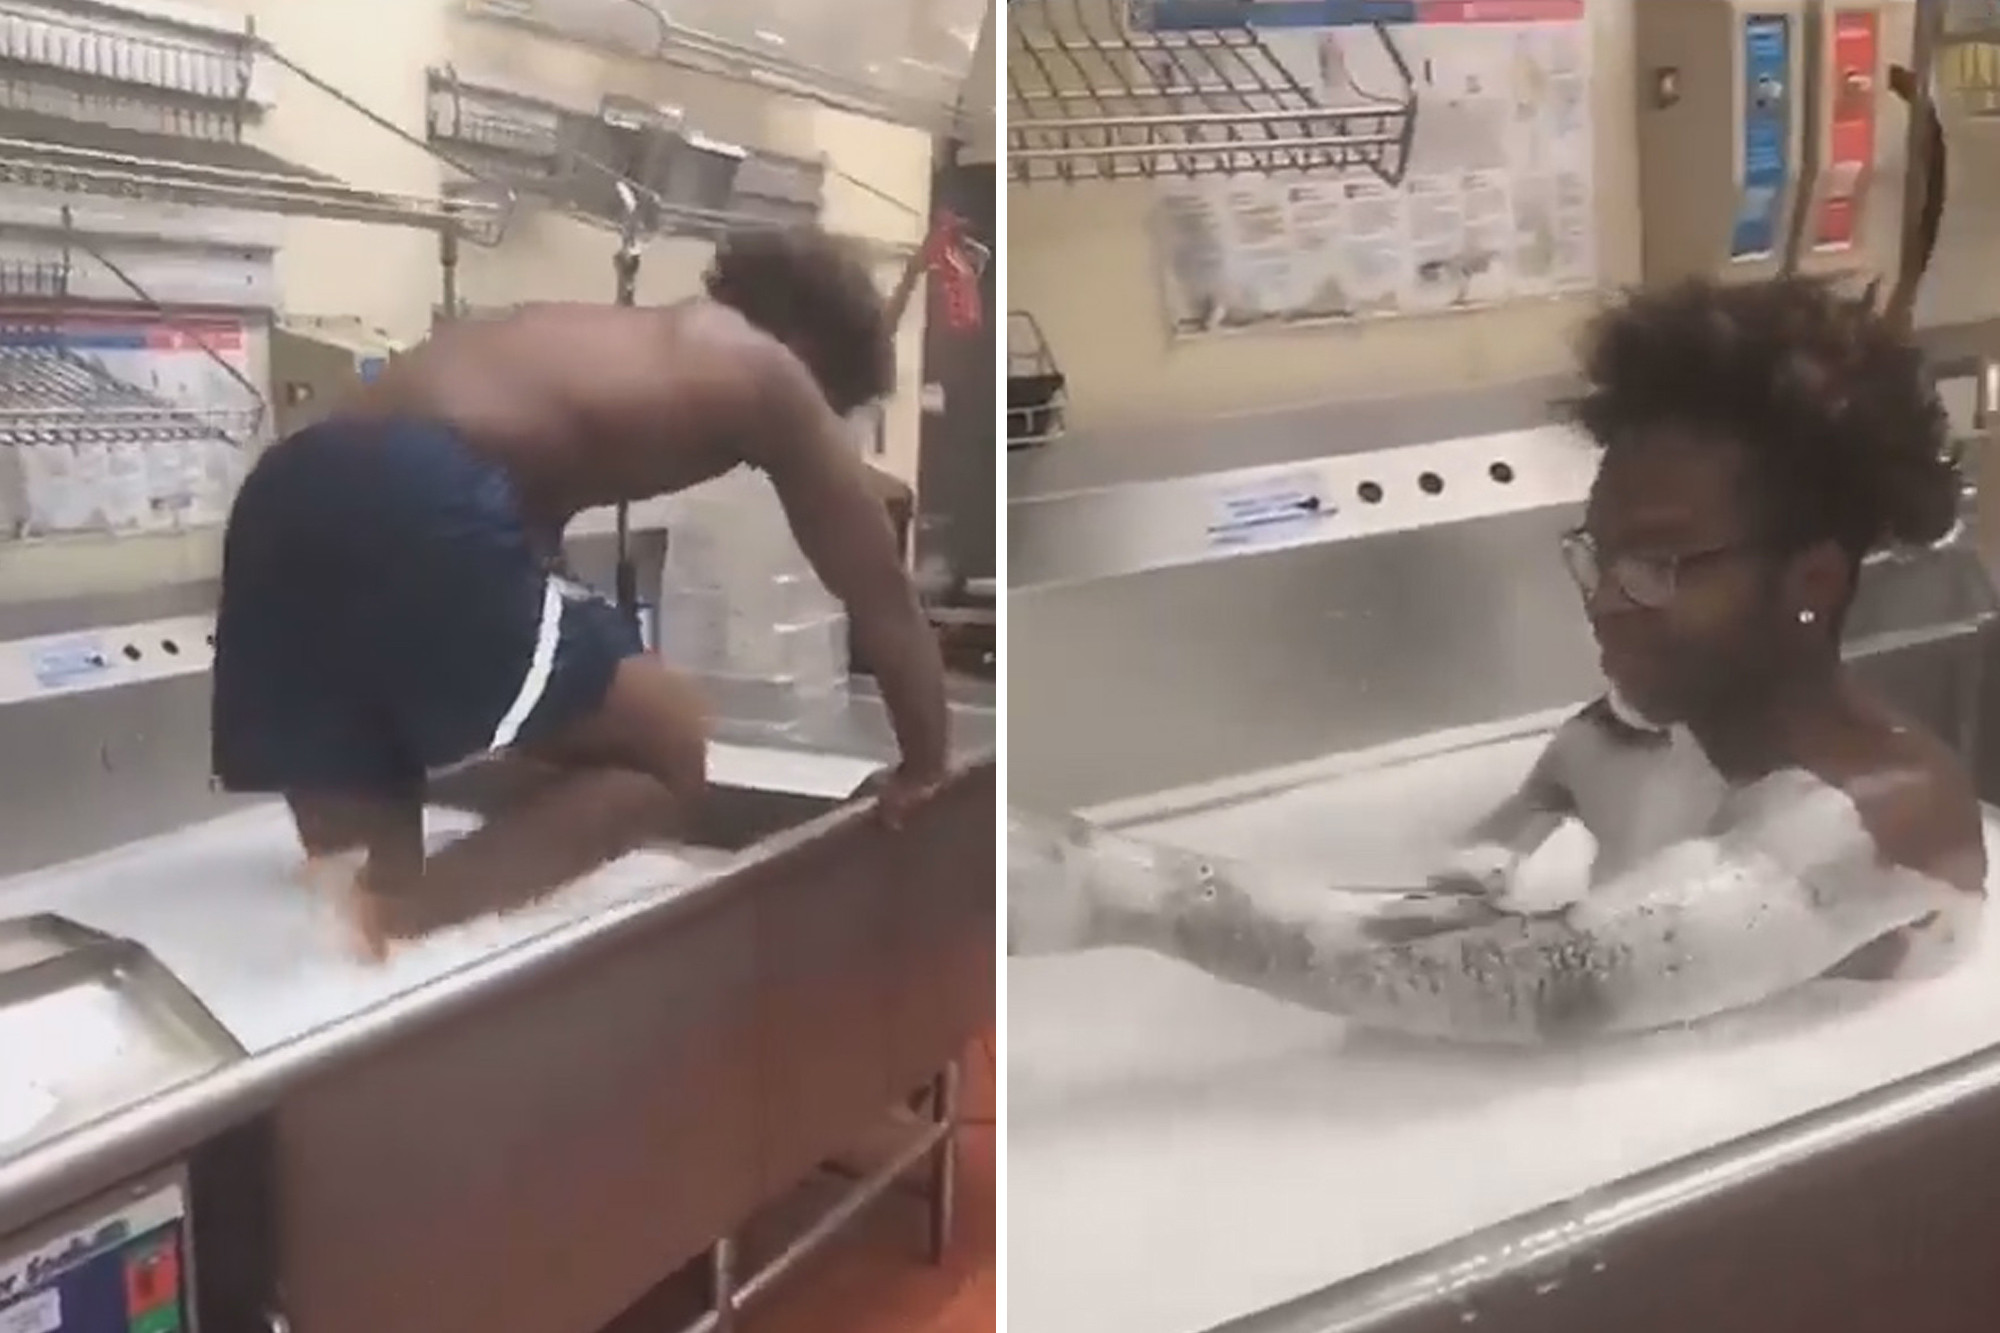 Wendy's employee takes bath in kitchen sink